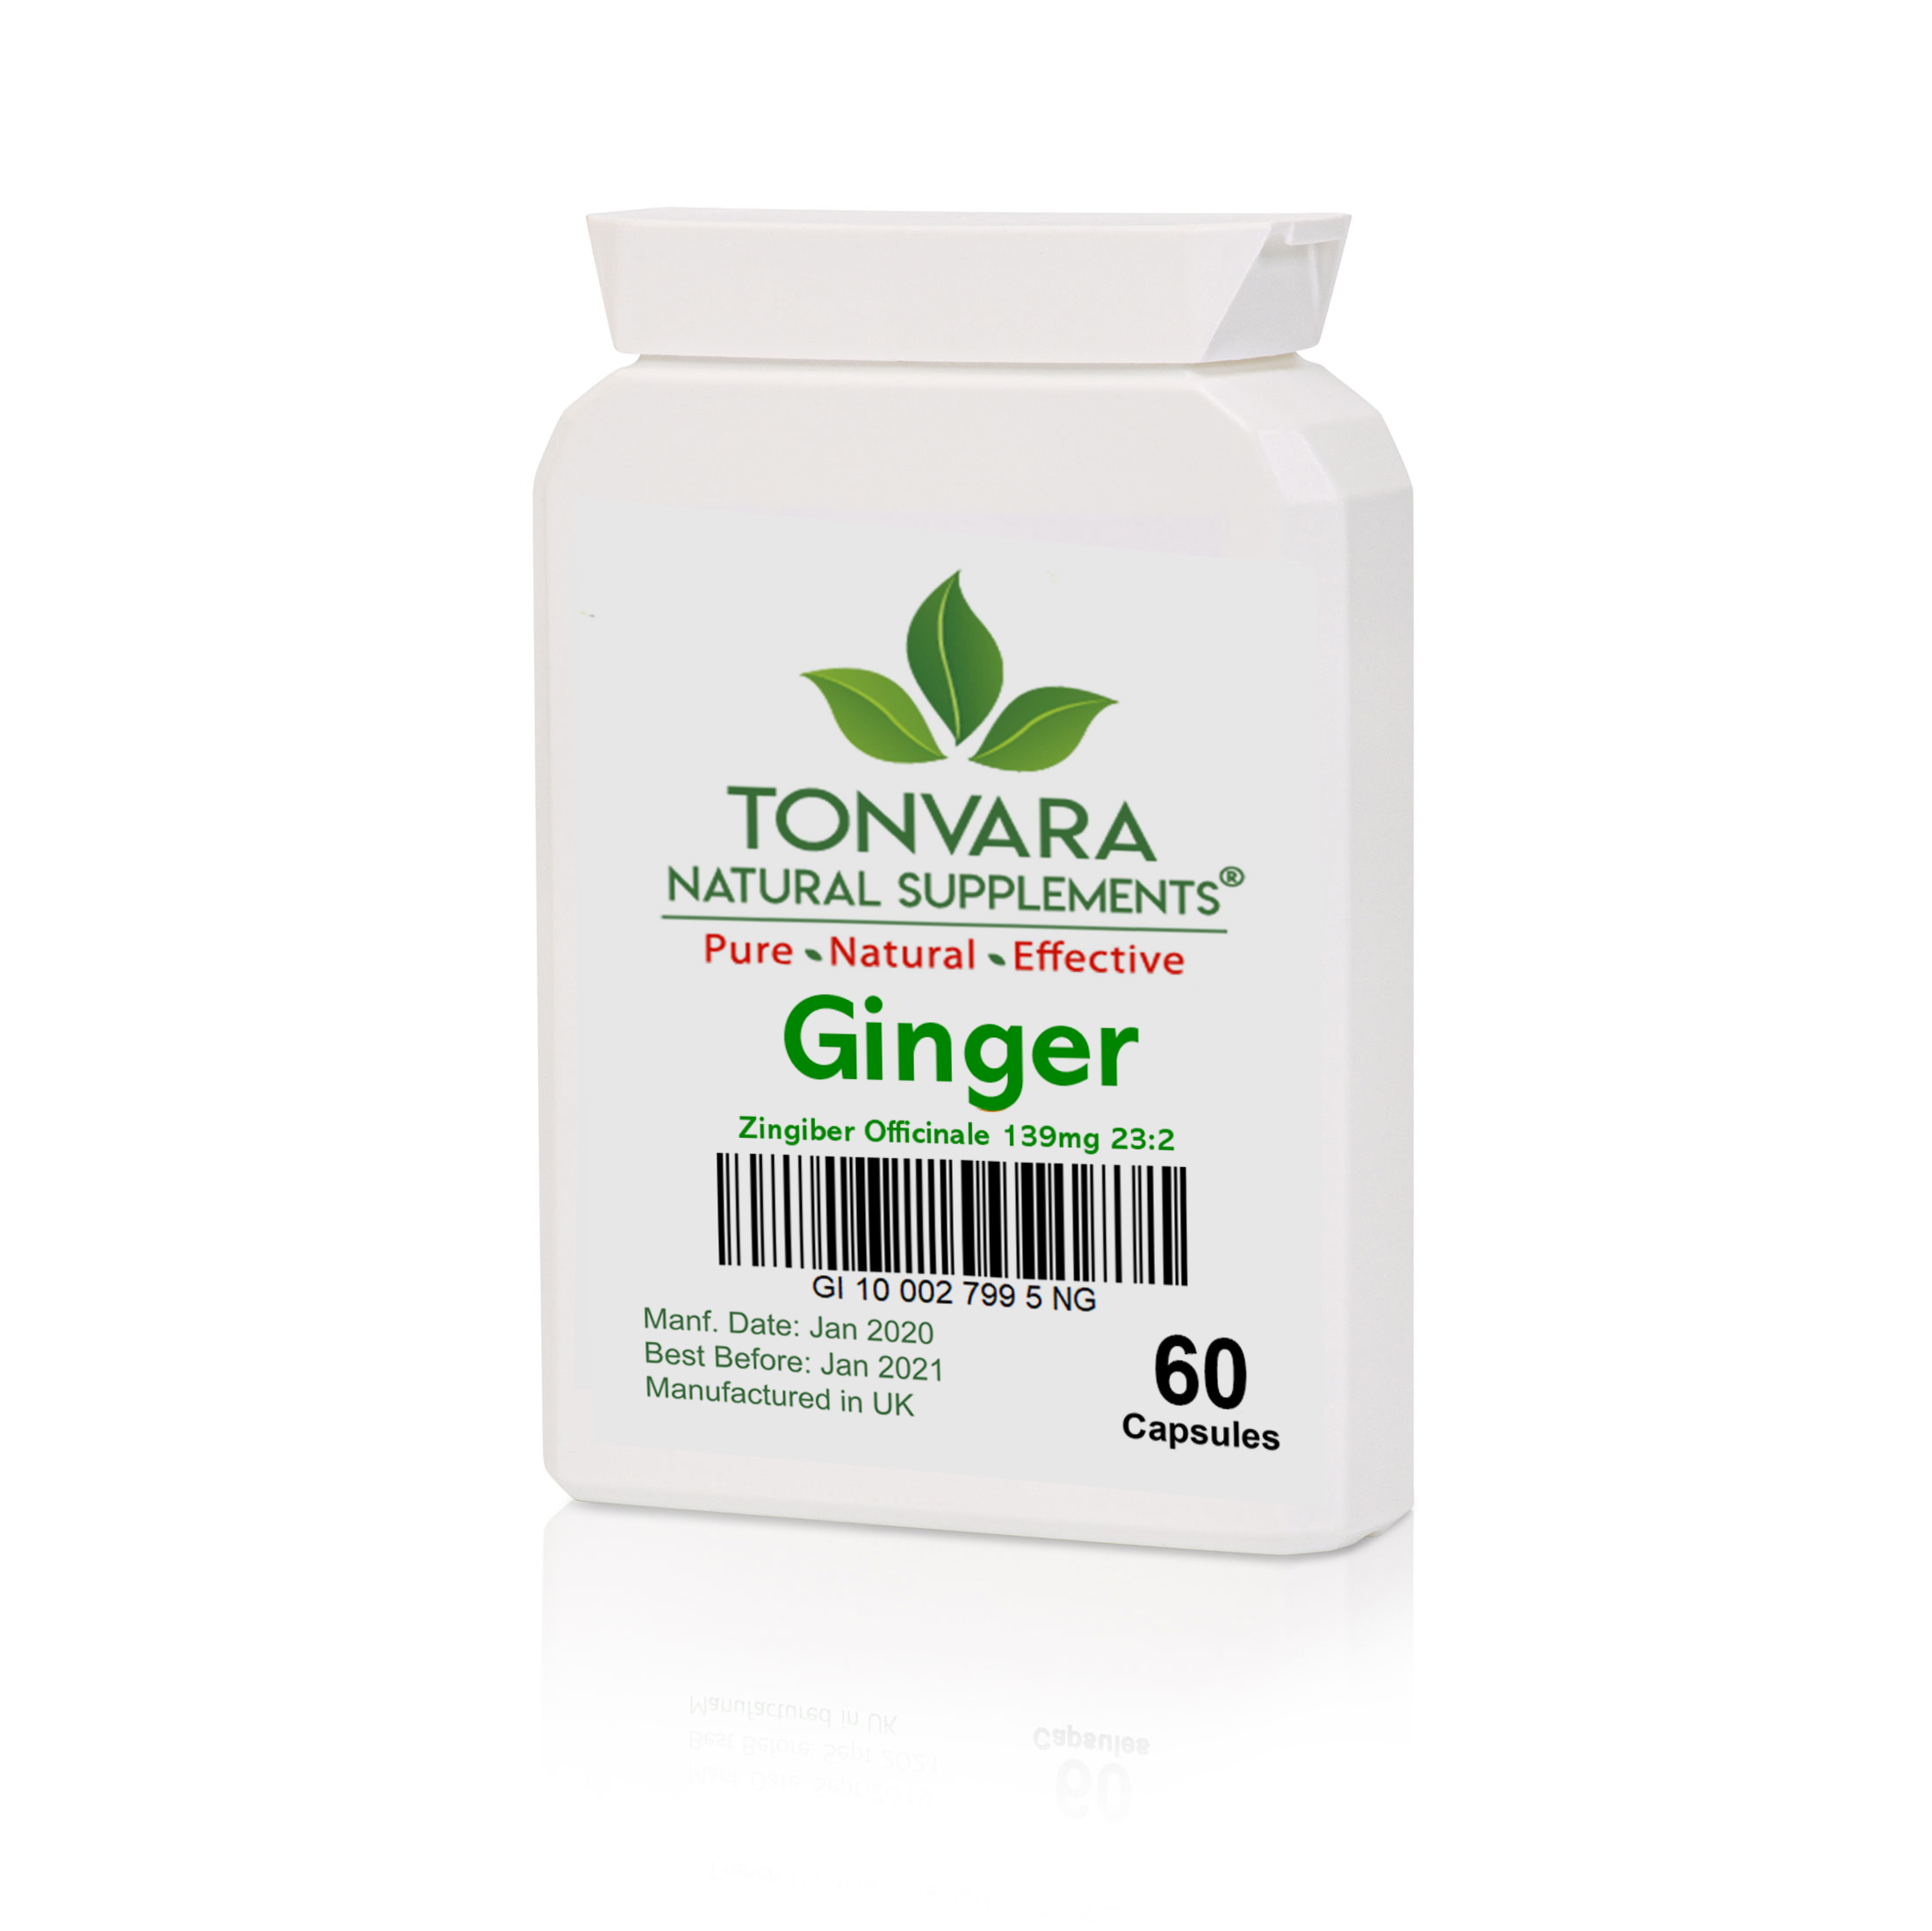 Tonvara Ginger Zingiber Officinale 139mg 23:2